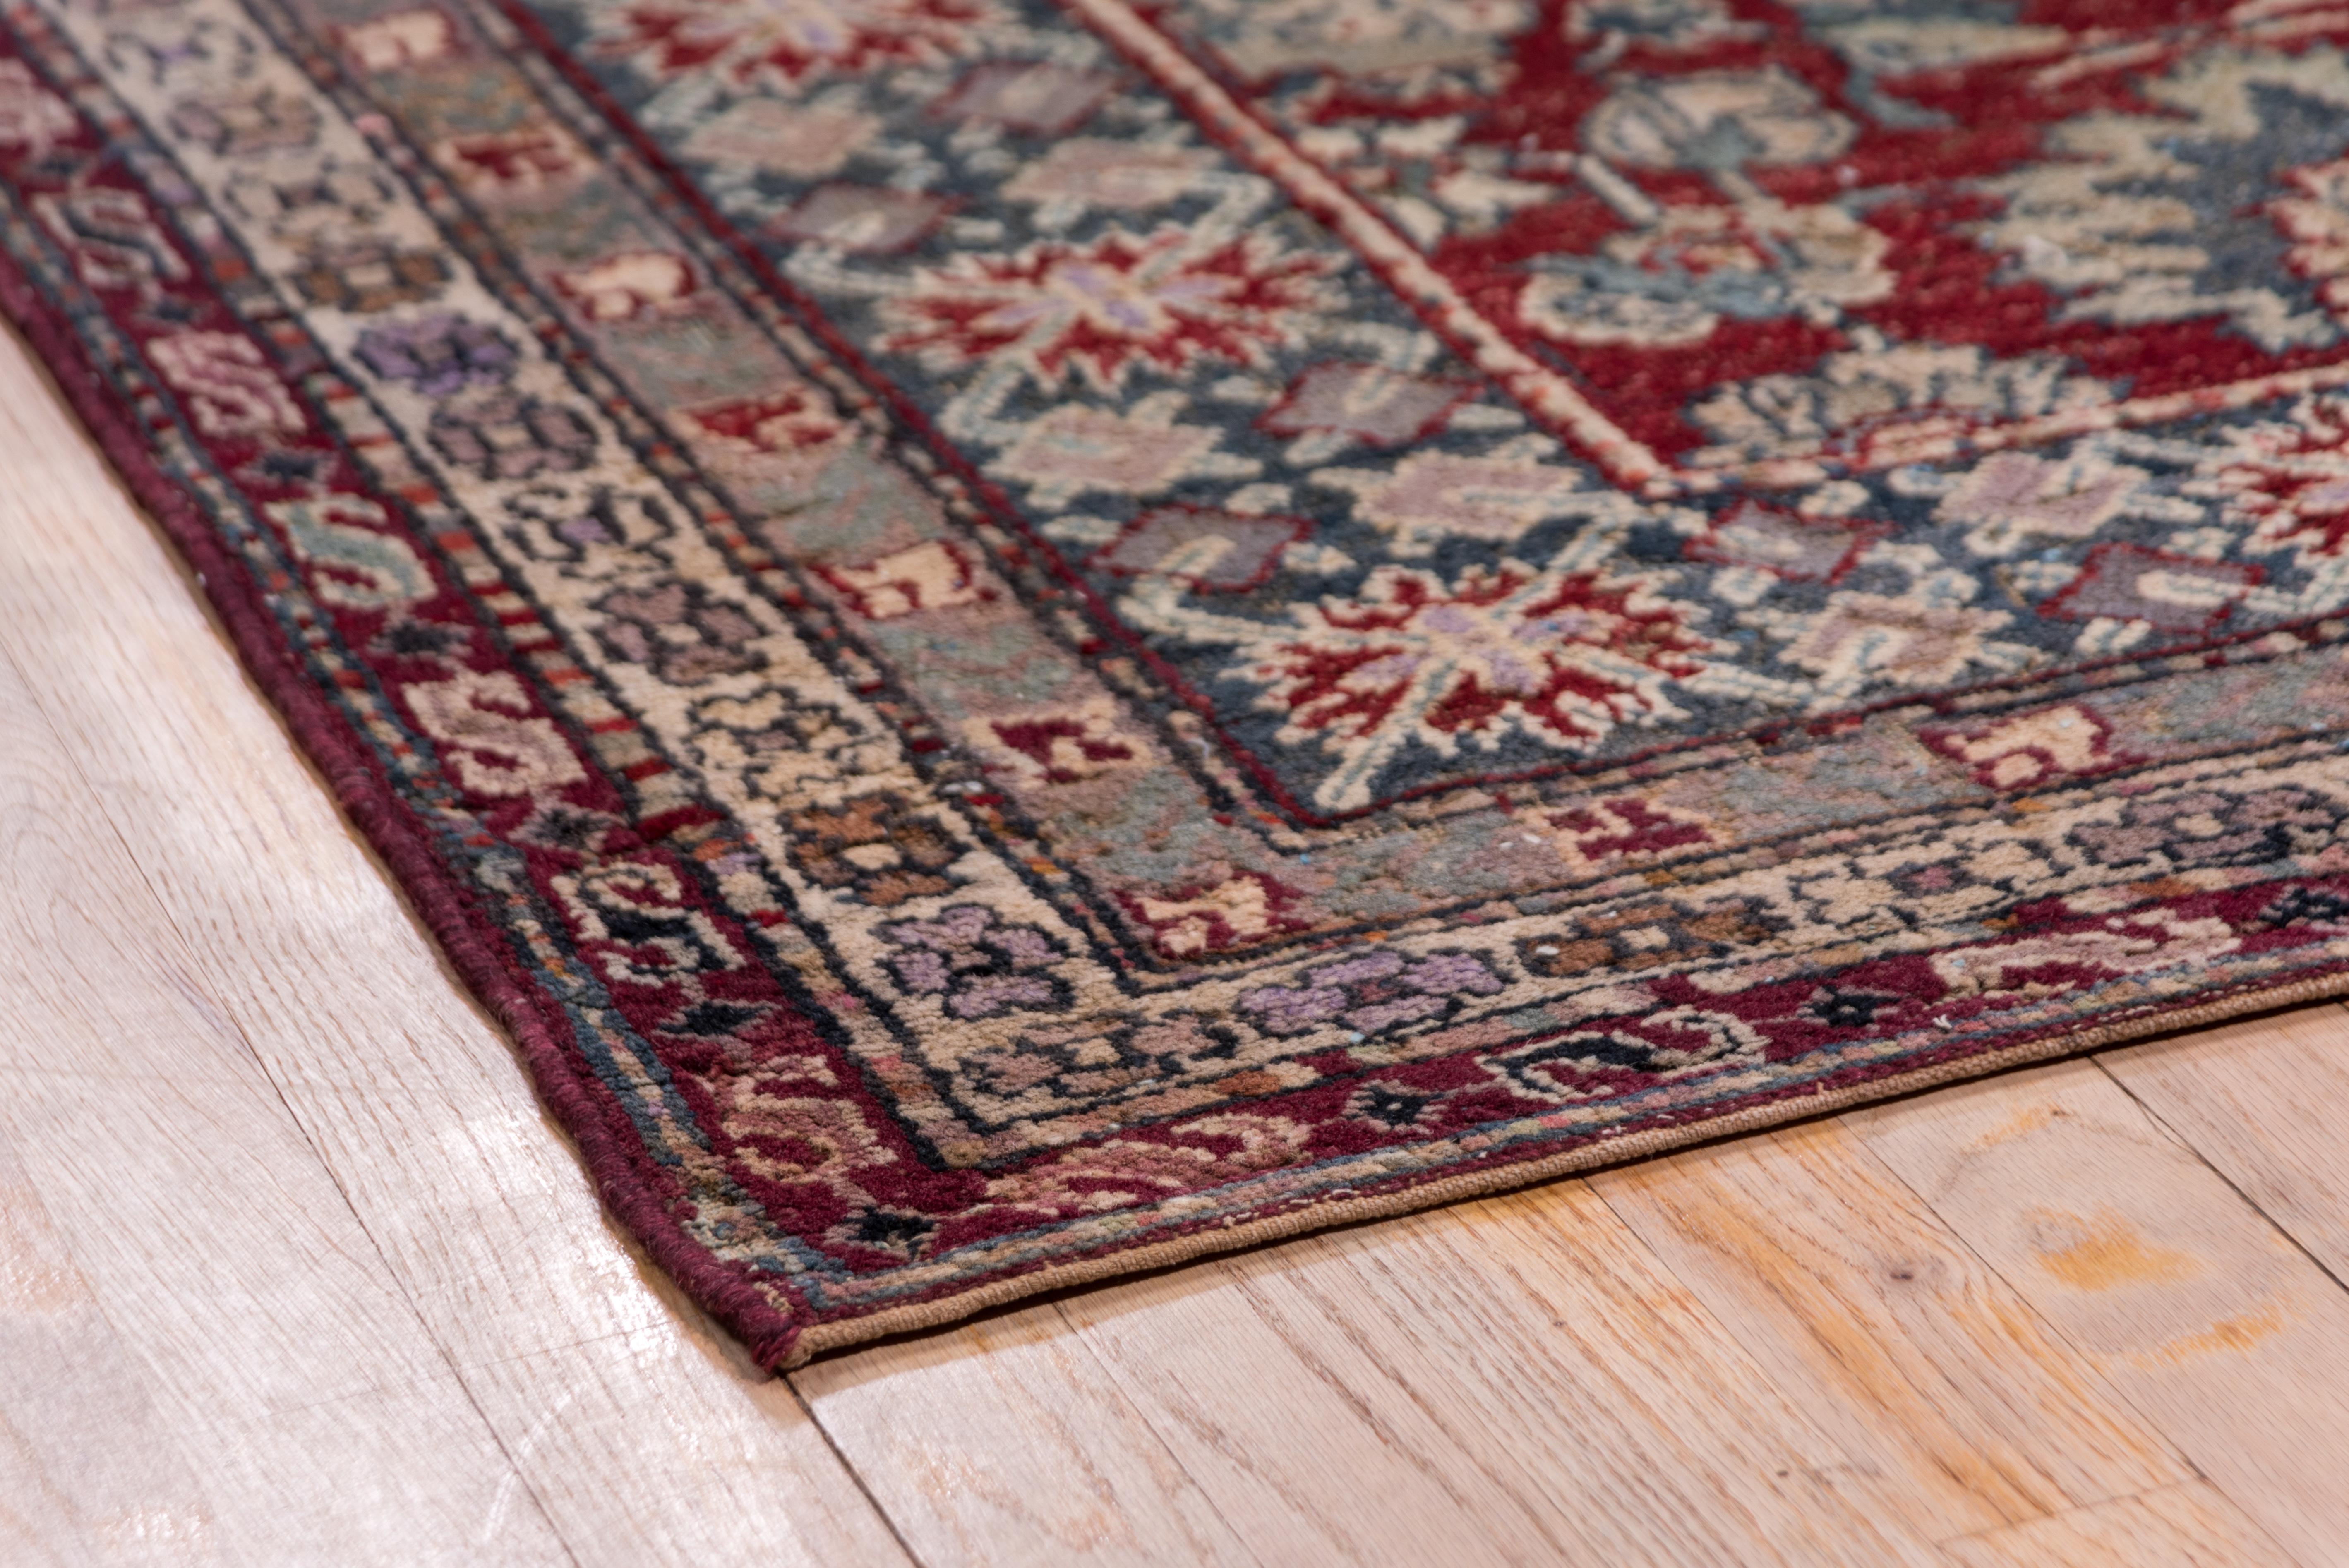 Indian Agra Carpet, Burgundy Field 5